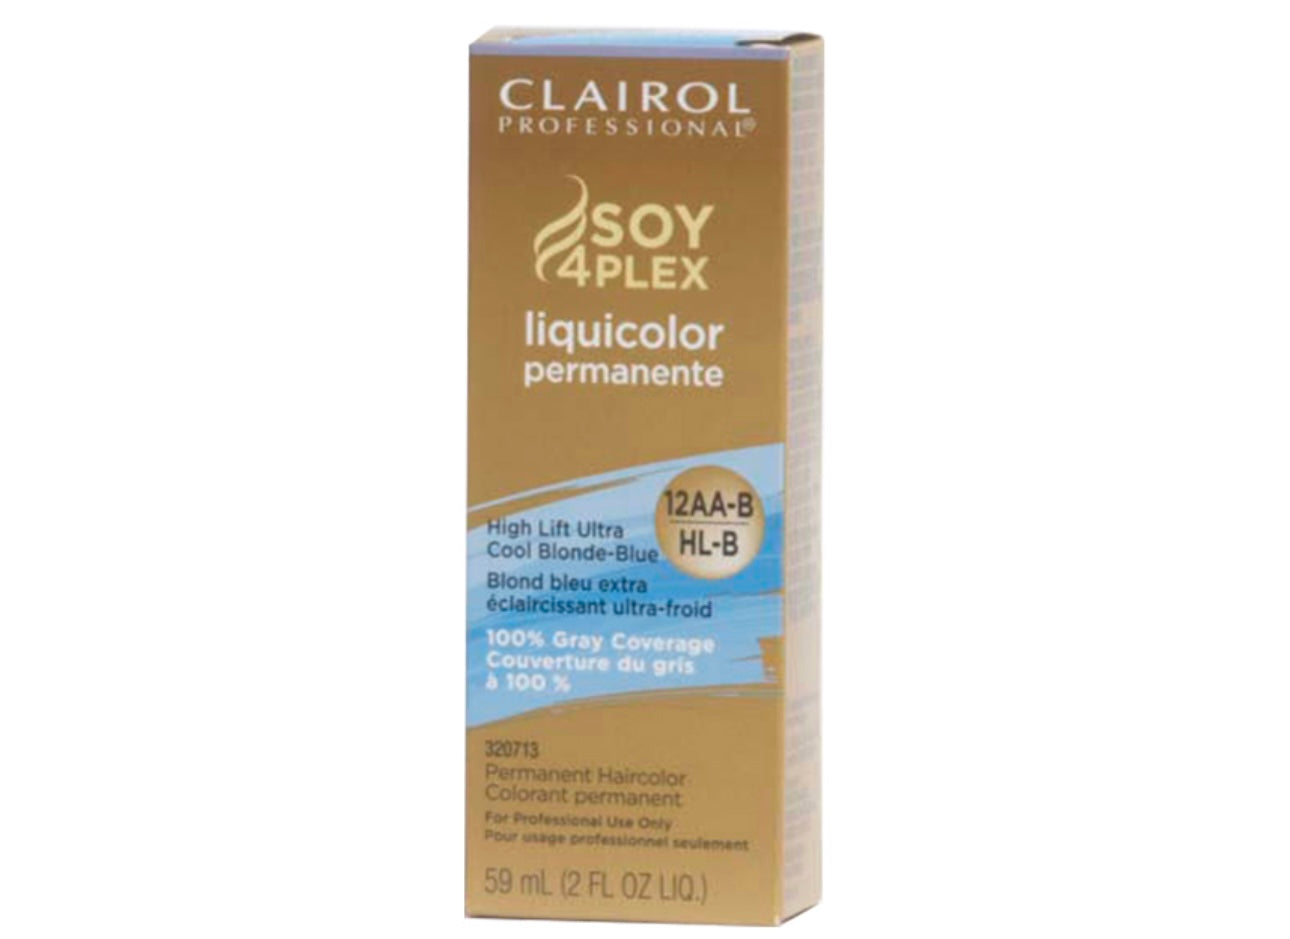 Clairol Professional Soy4Plex Liquicolor Permanente